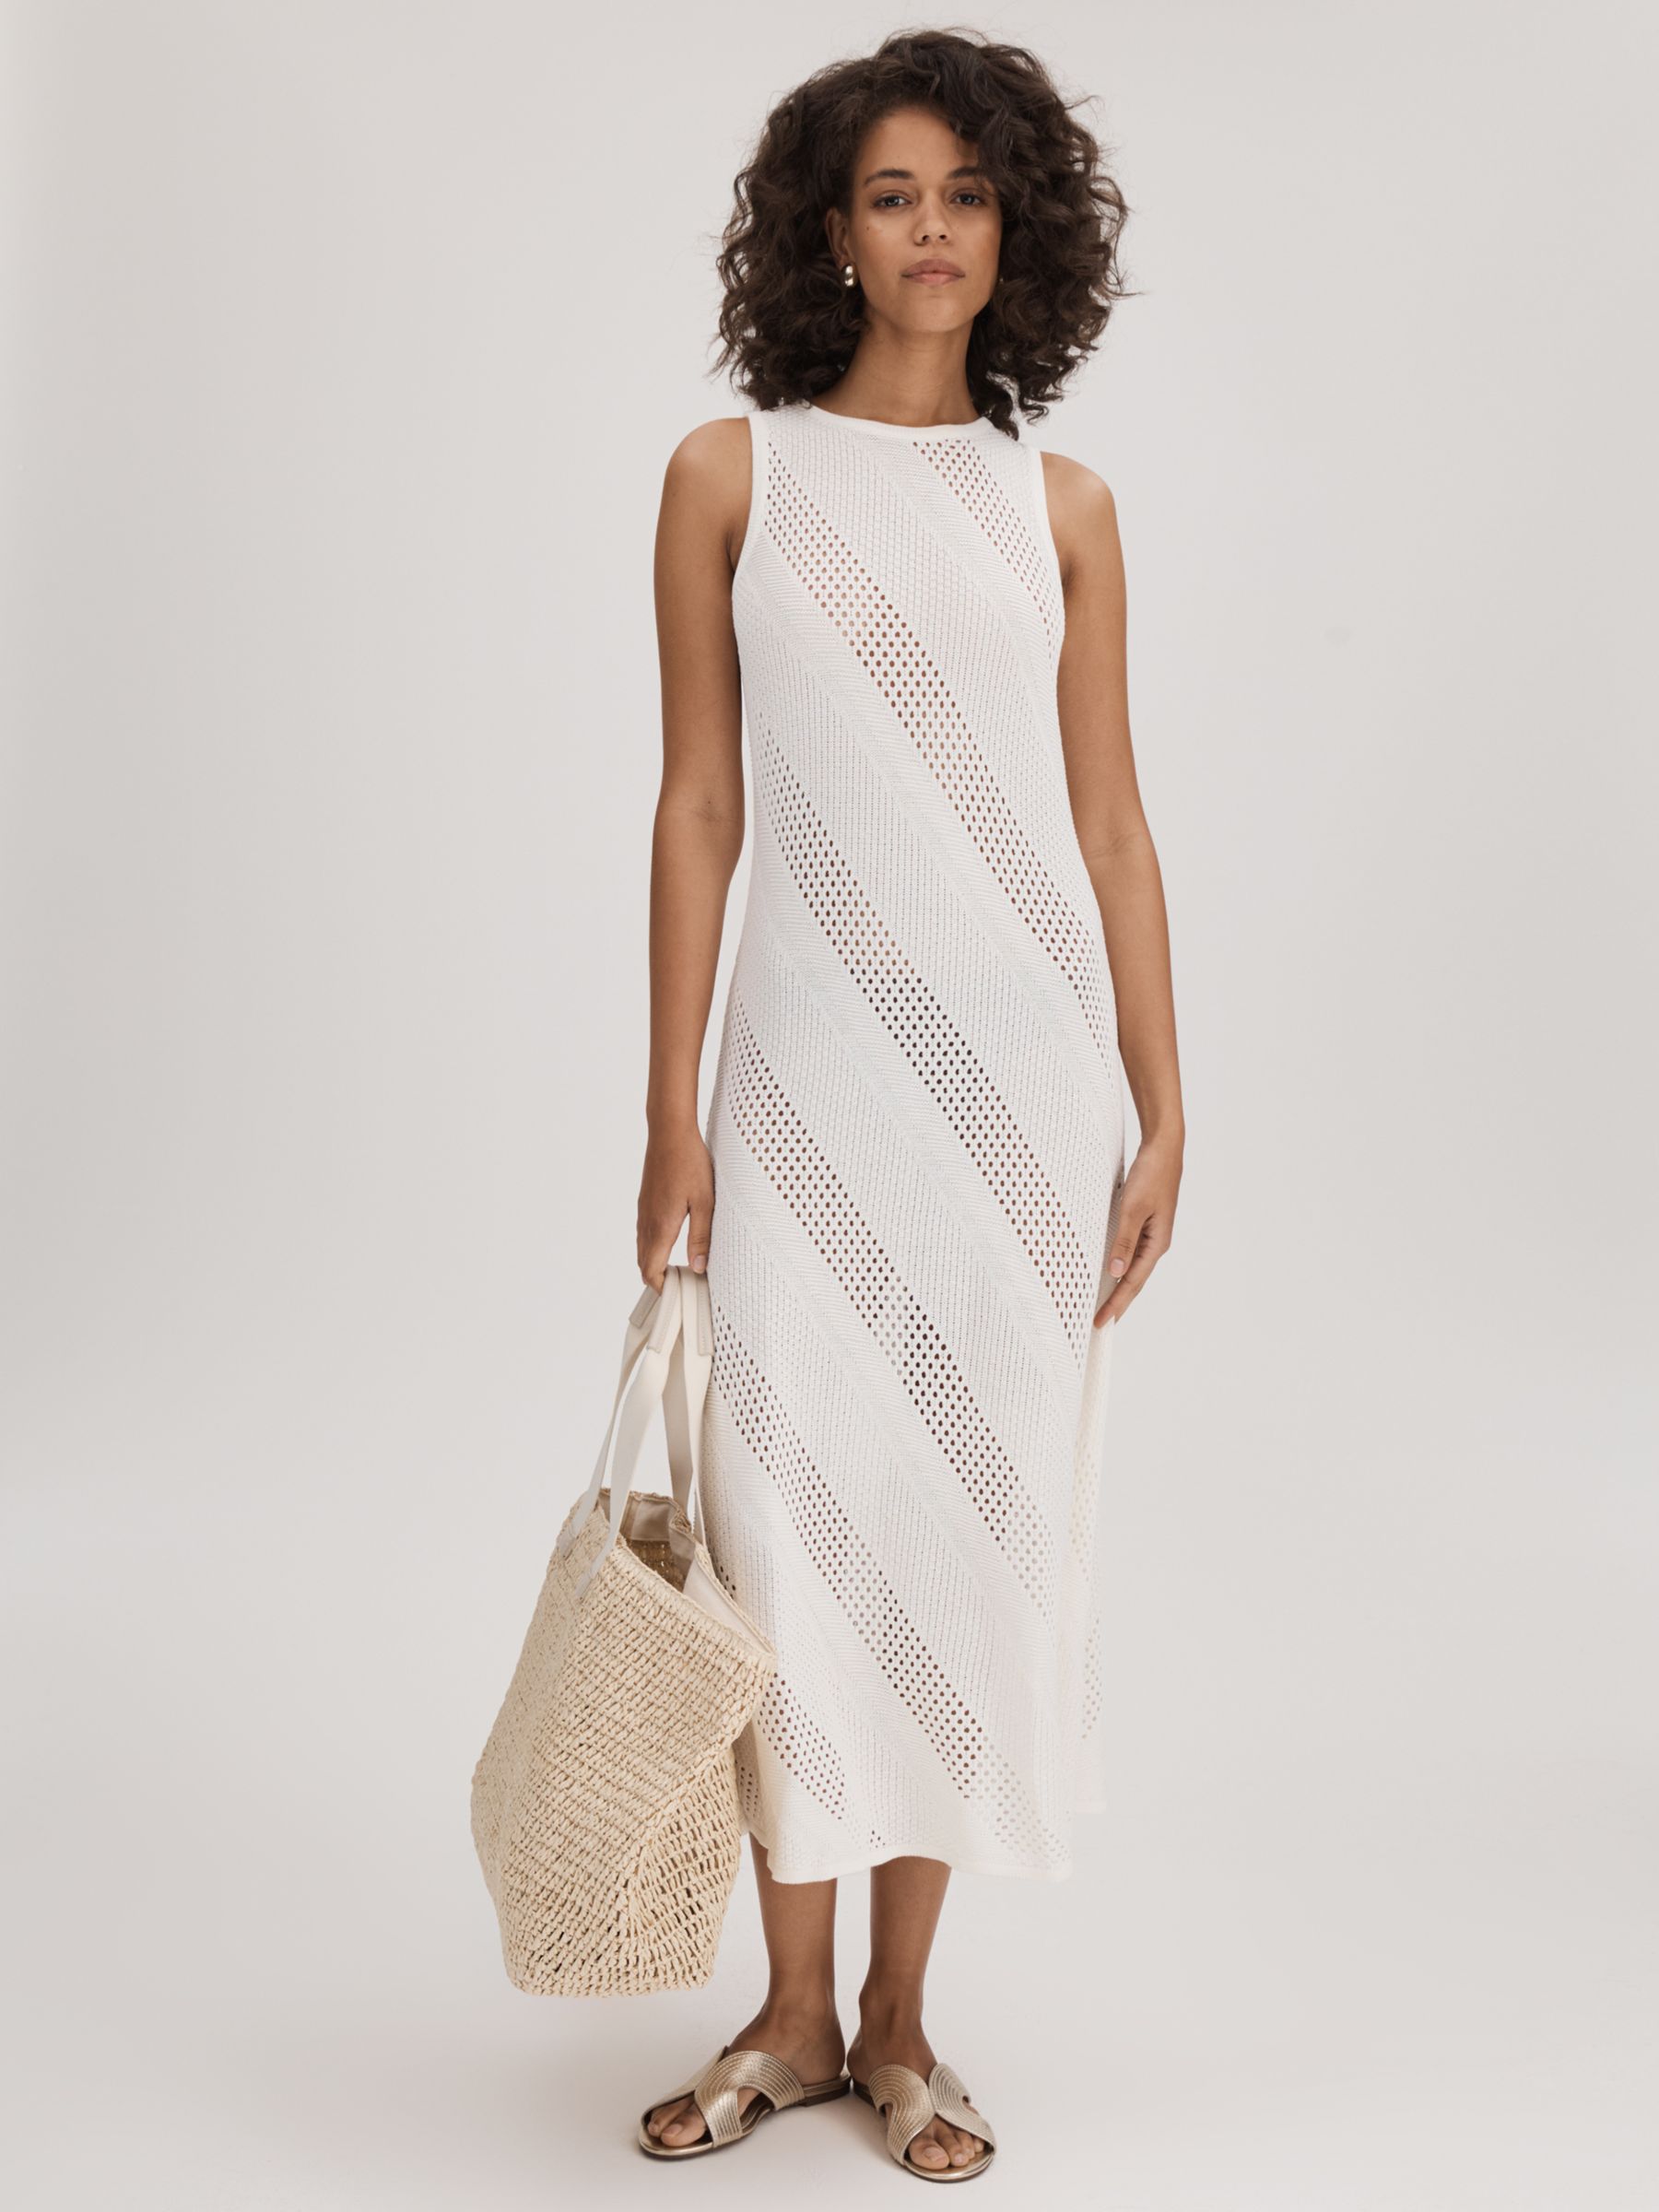 FLORERE Sleeveless Crochet Dress, Ivory, 16